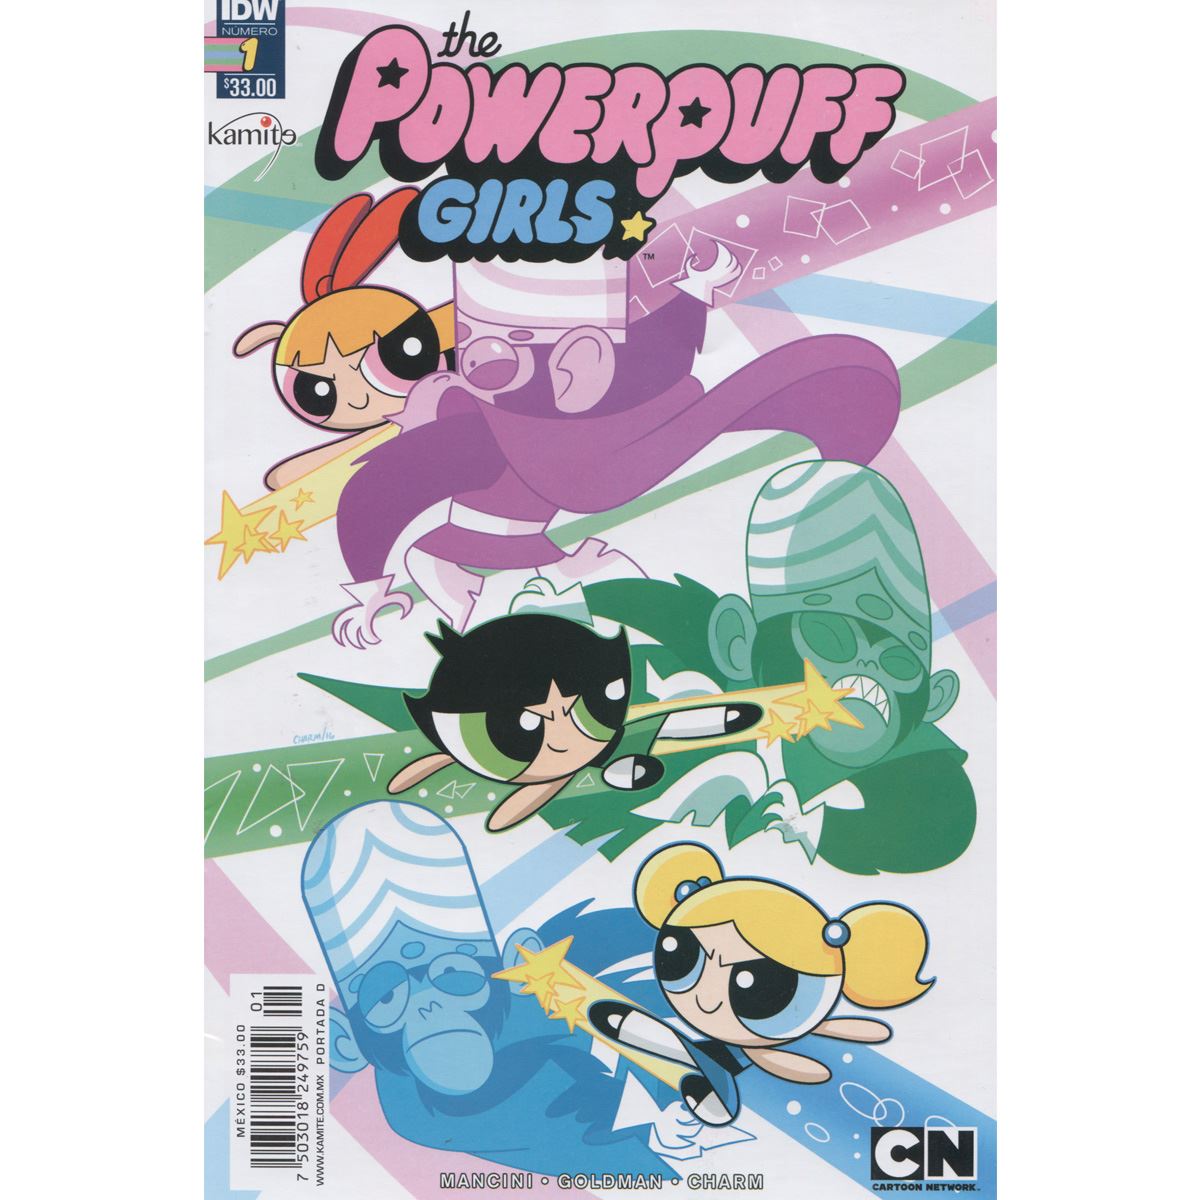 THE POWERPUFF GIRLS #1 - Fantasy Spells